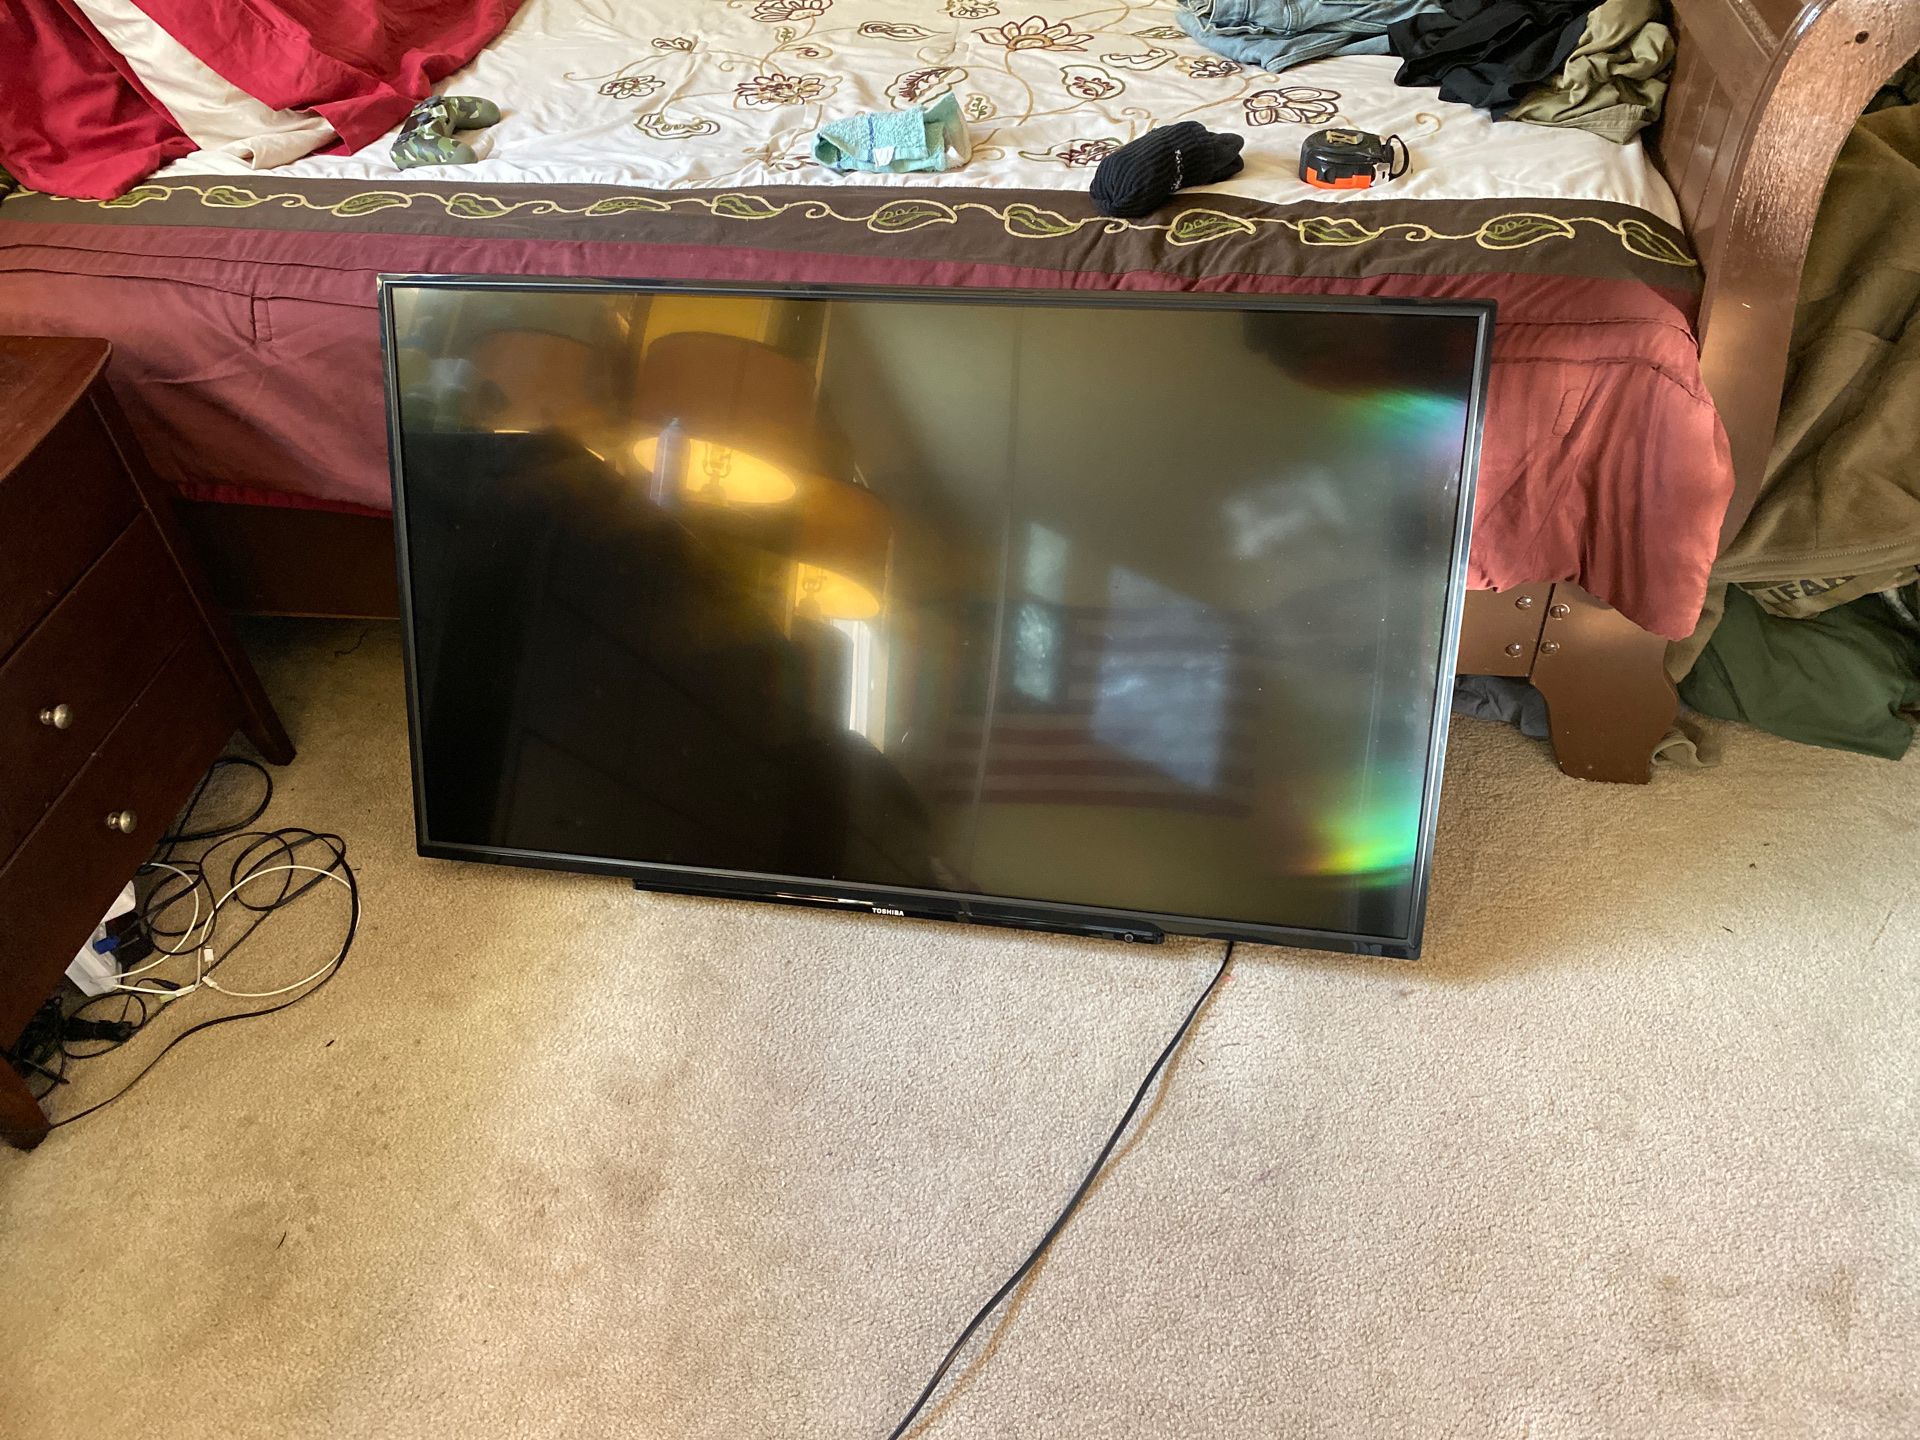 55 inch Toshiba TV